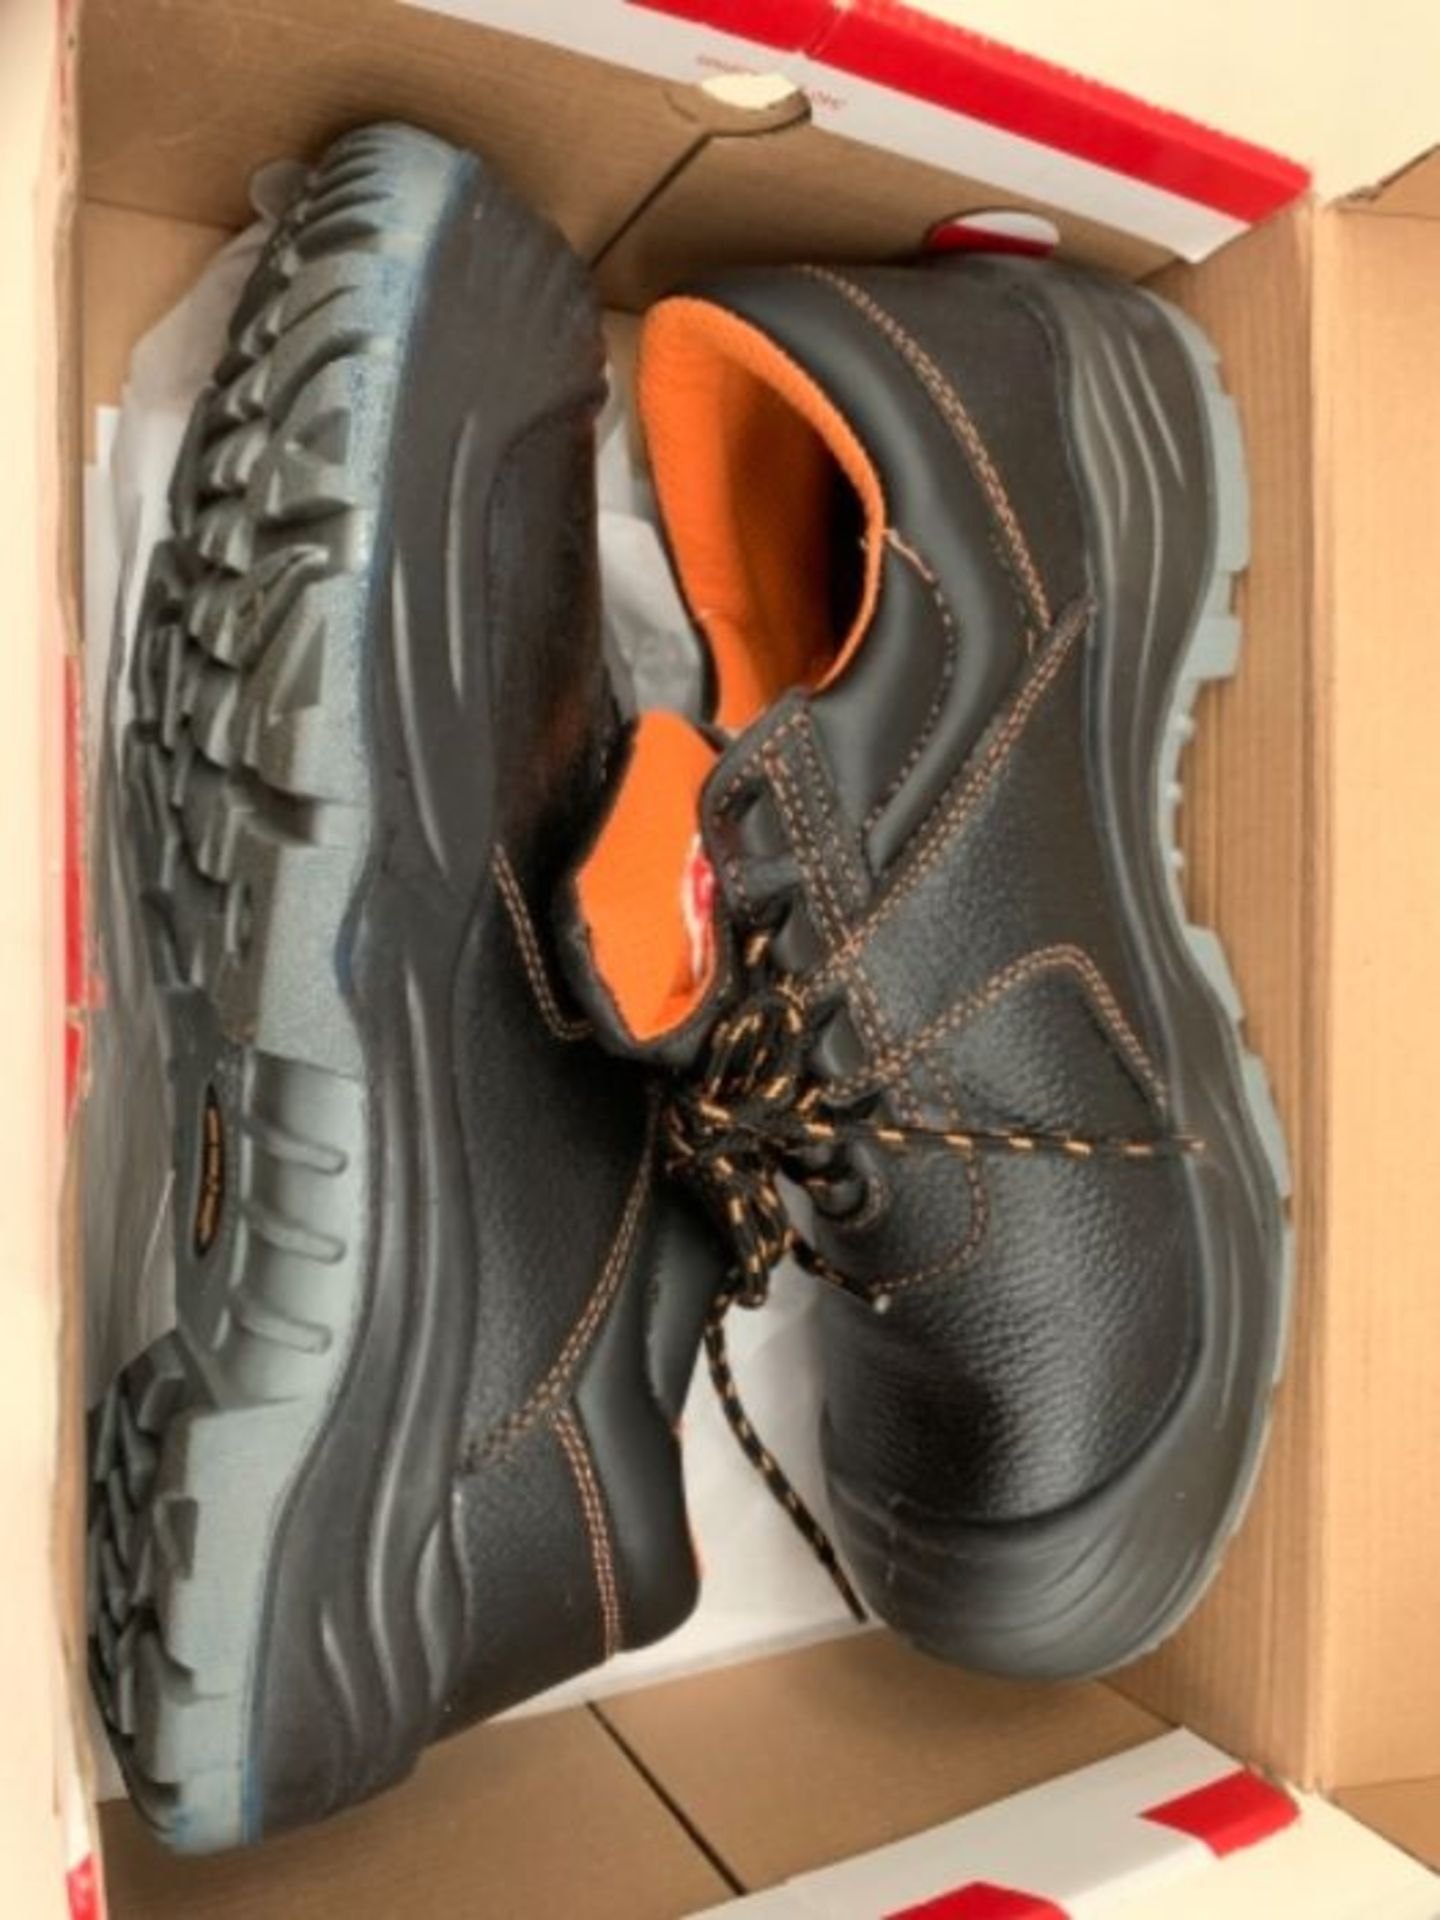 Reis BCS43 Composite Power Safety shoes, Black-Orange, 43 Size - Image 3 of 3